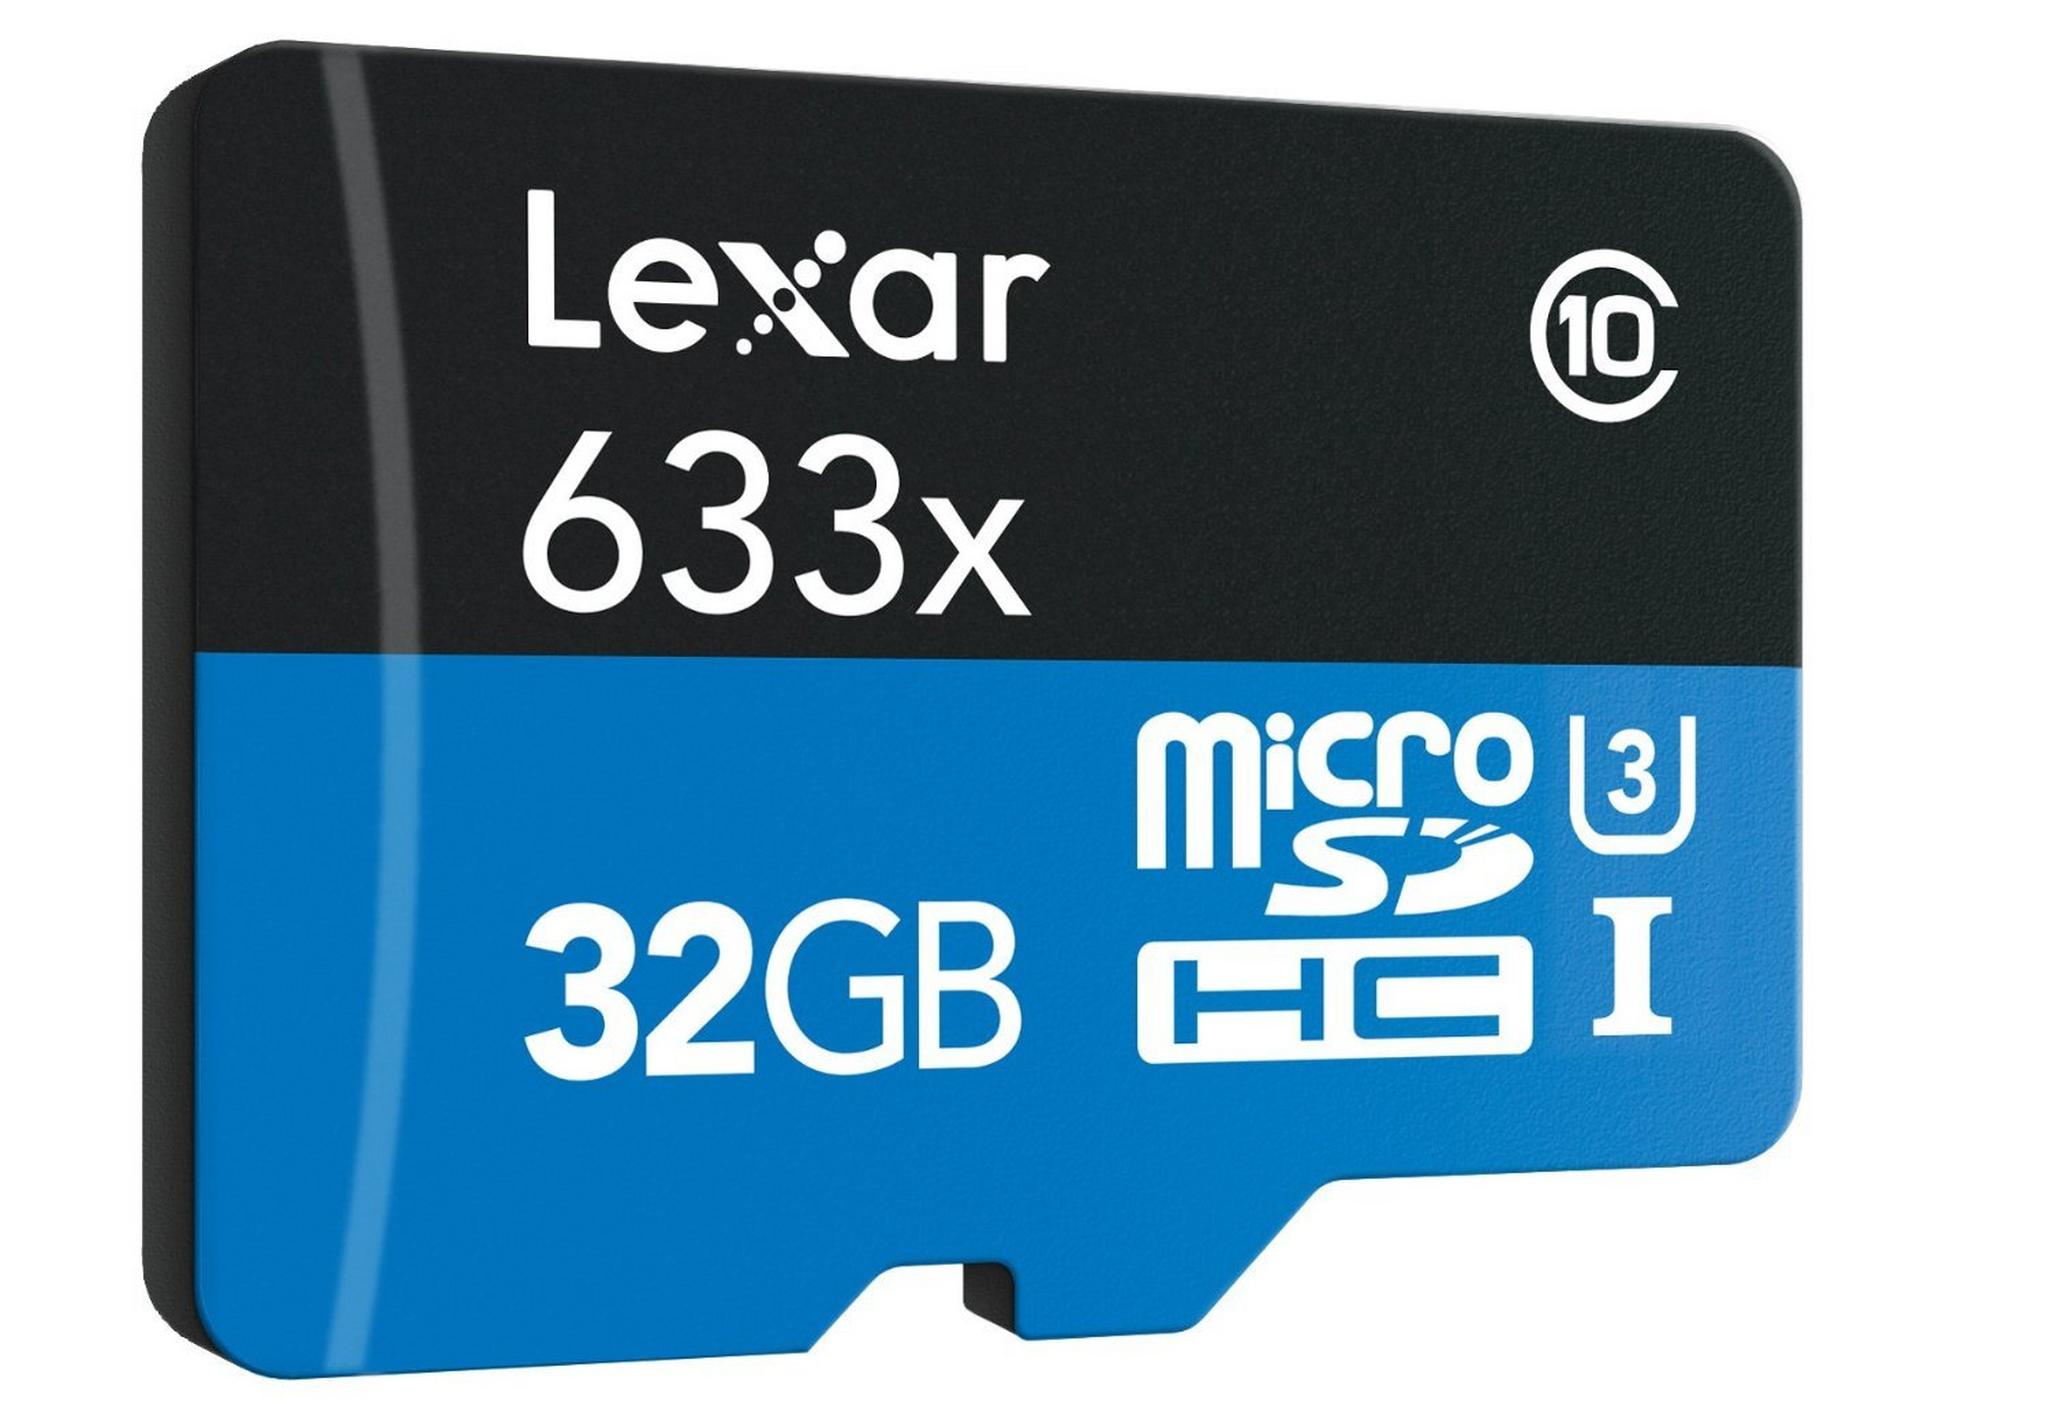 Lexar 32GB MicroSDHC UHS-I Class 10 Memory Card